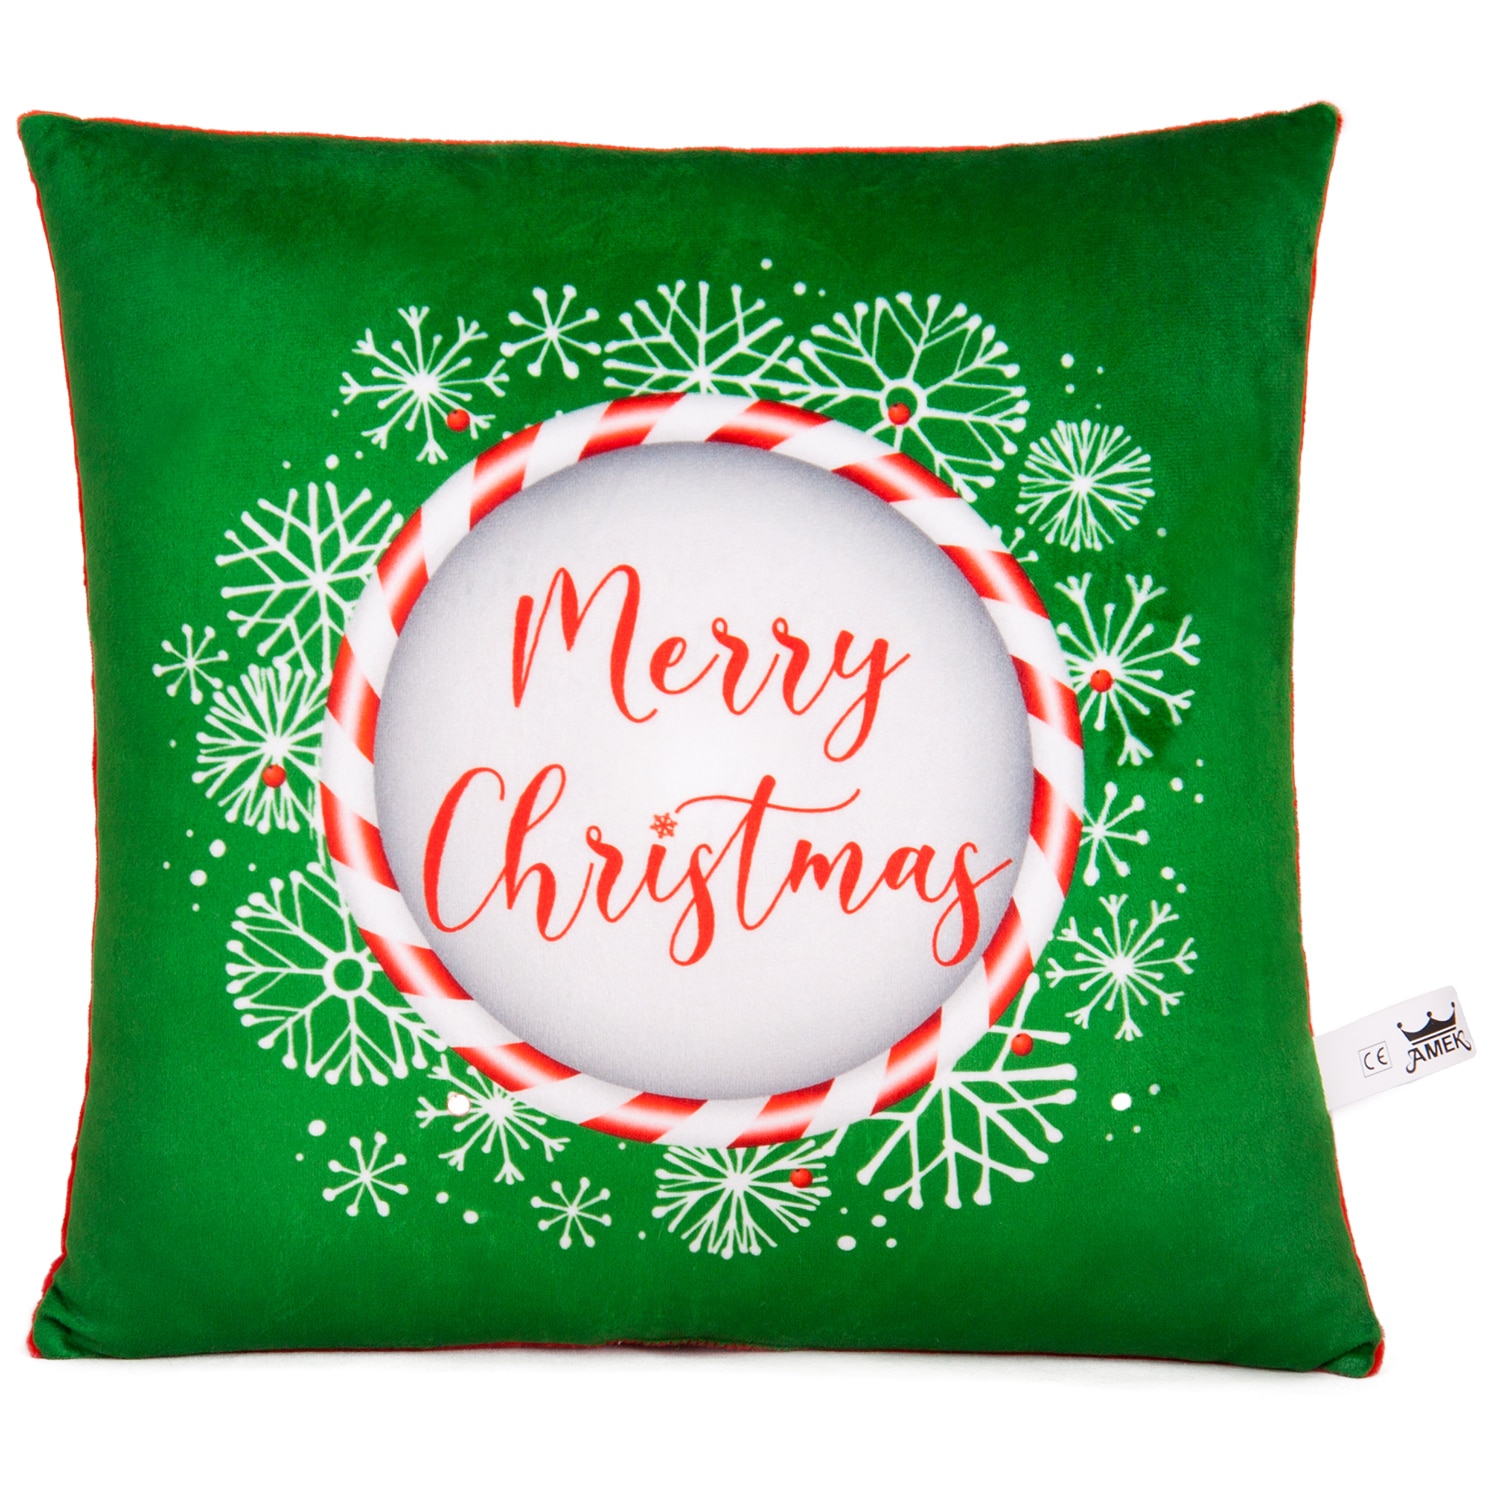 Christmas pillow / Merry Chrismas /